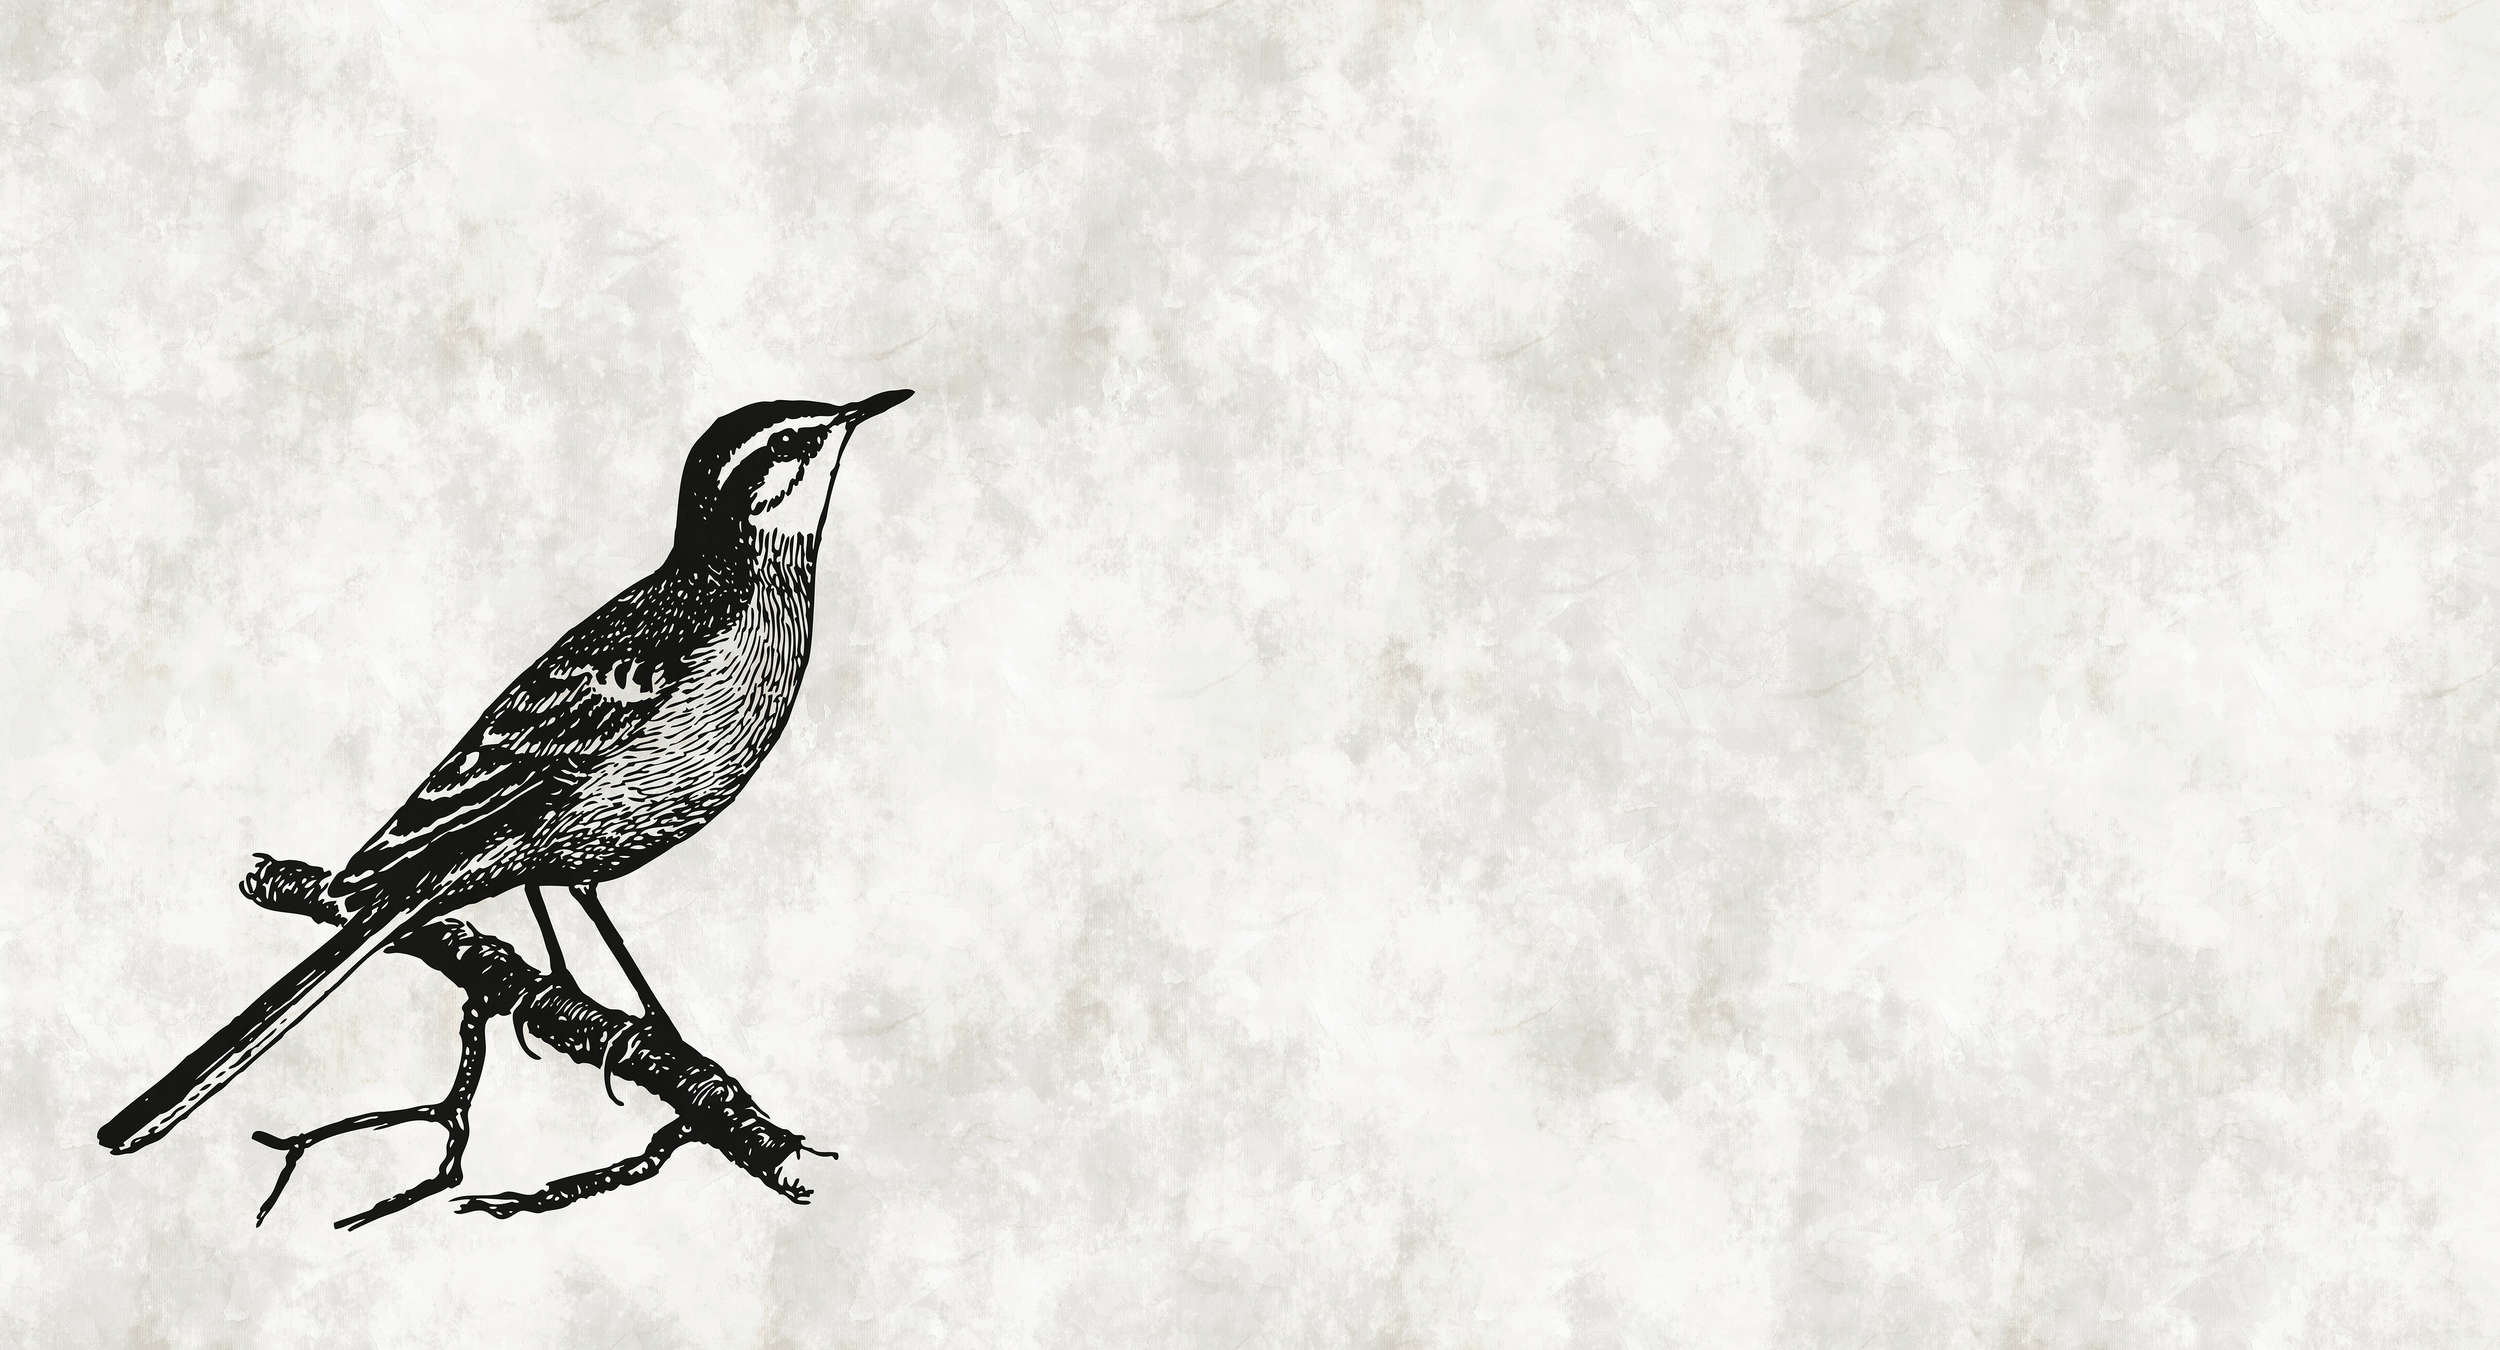             Papel pintado con aspecto de pájaro con óptica de yeso - Blanco, Negro
        